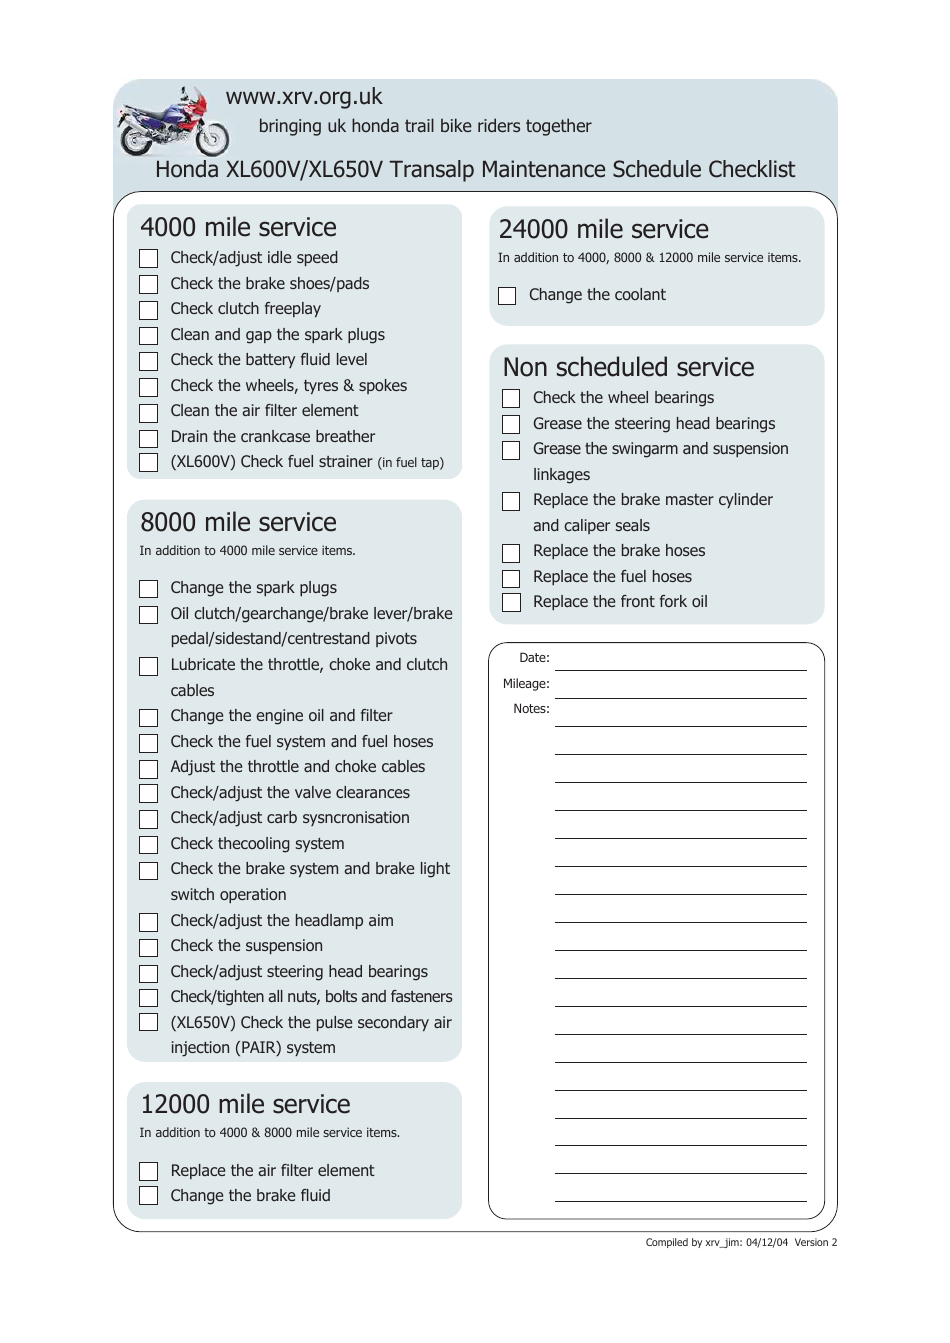 Maintenance Schedule Checklist Template for Xl600v/Xl650v Transalp Models - Honda Document Preview